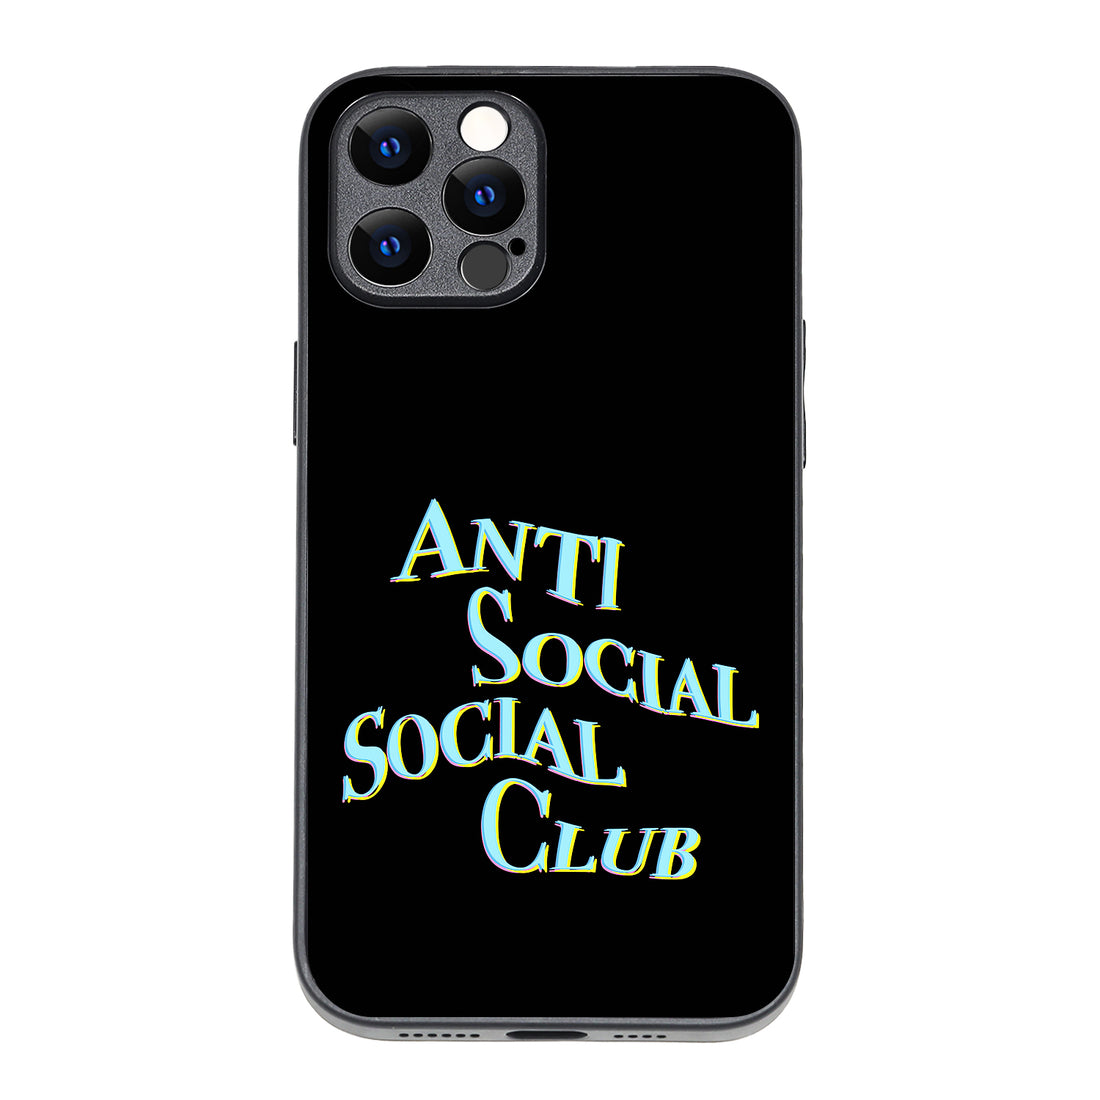 Social Club Black Motivational Quotes iPhone 12 Pro Max Case